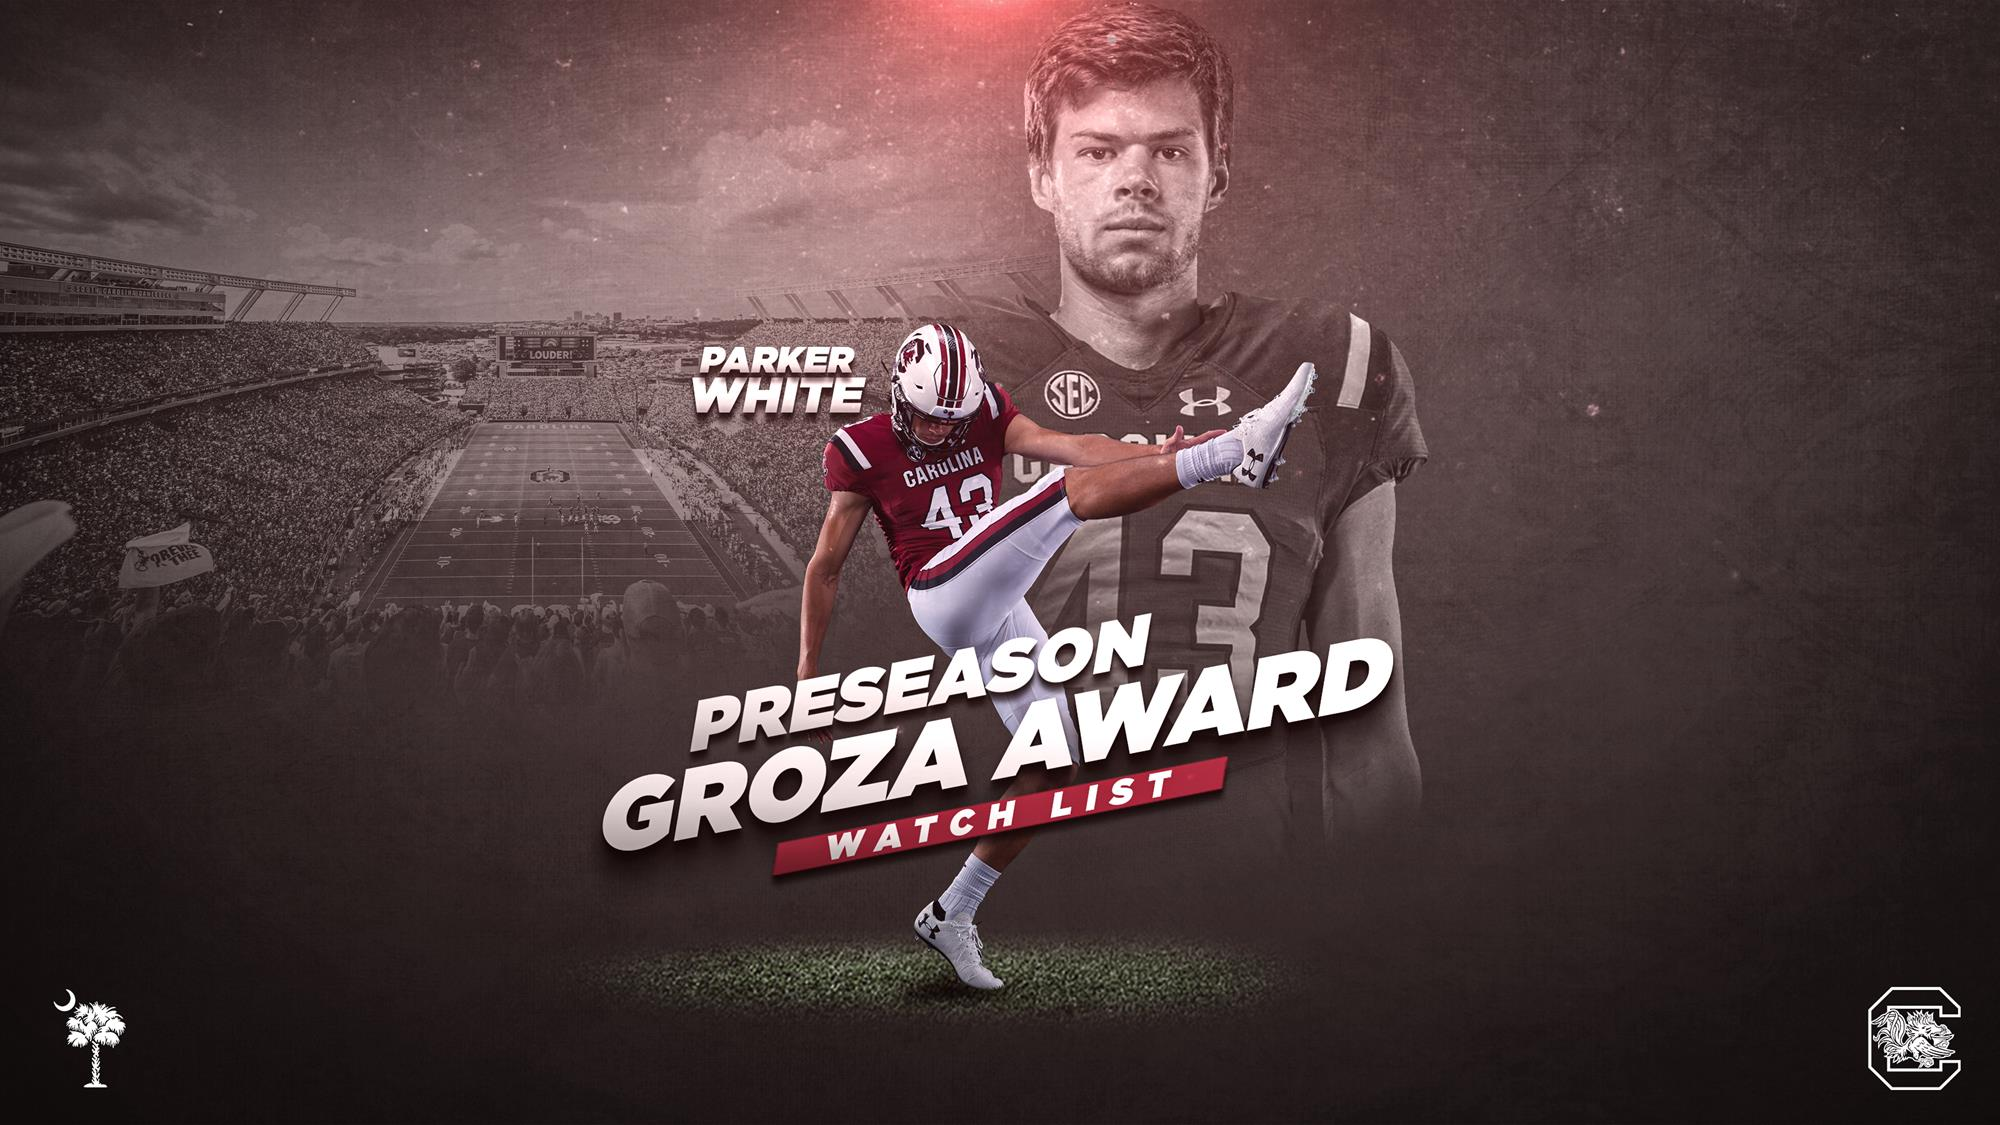 White Named to Groza Award Watch List